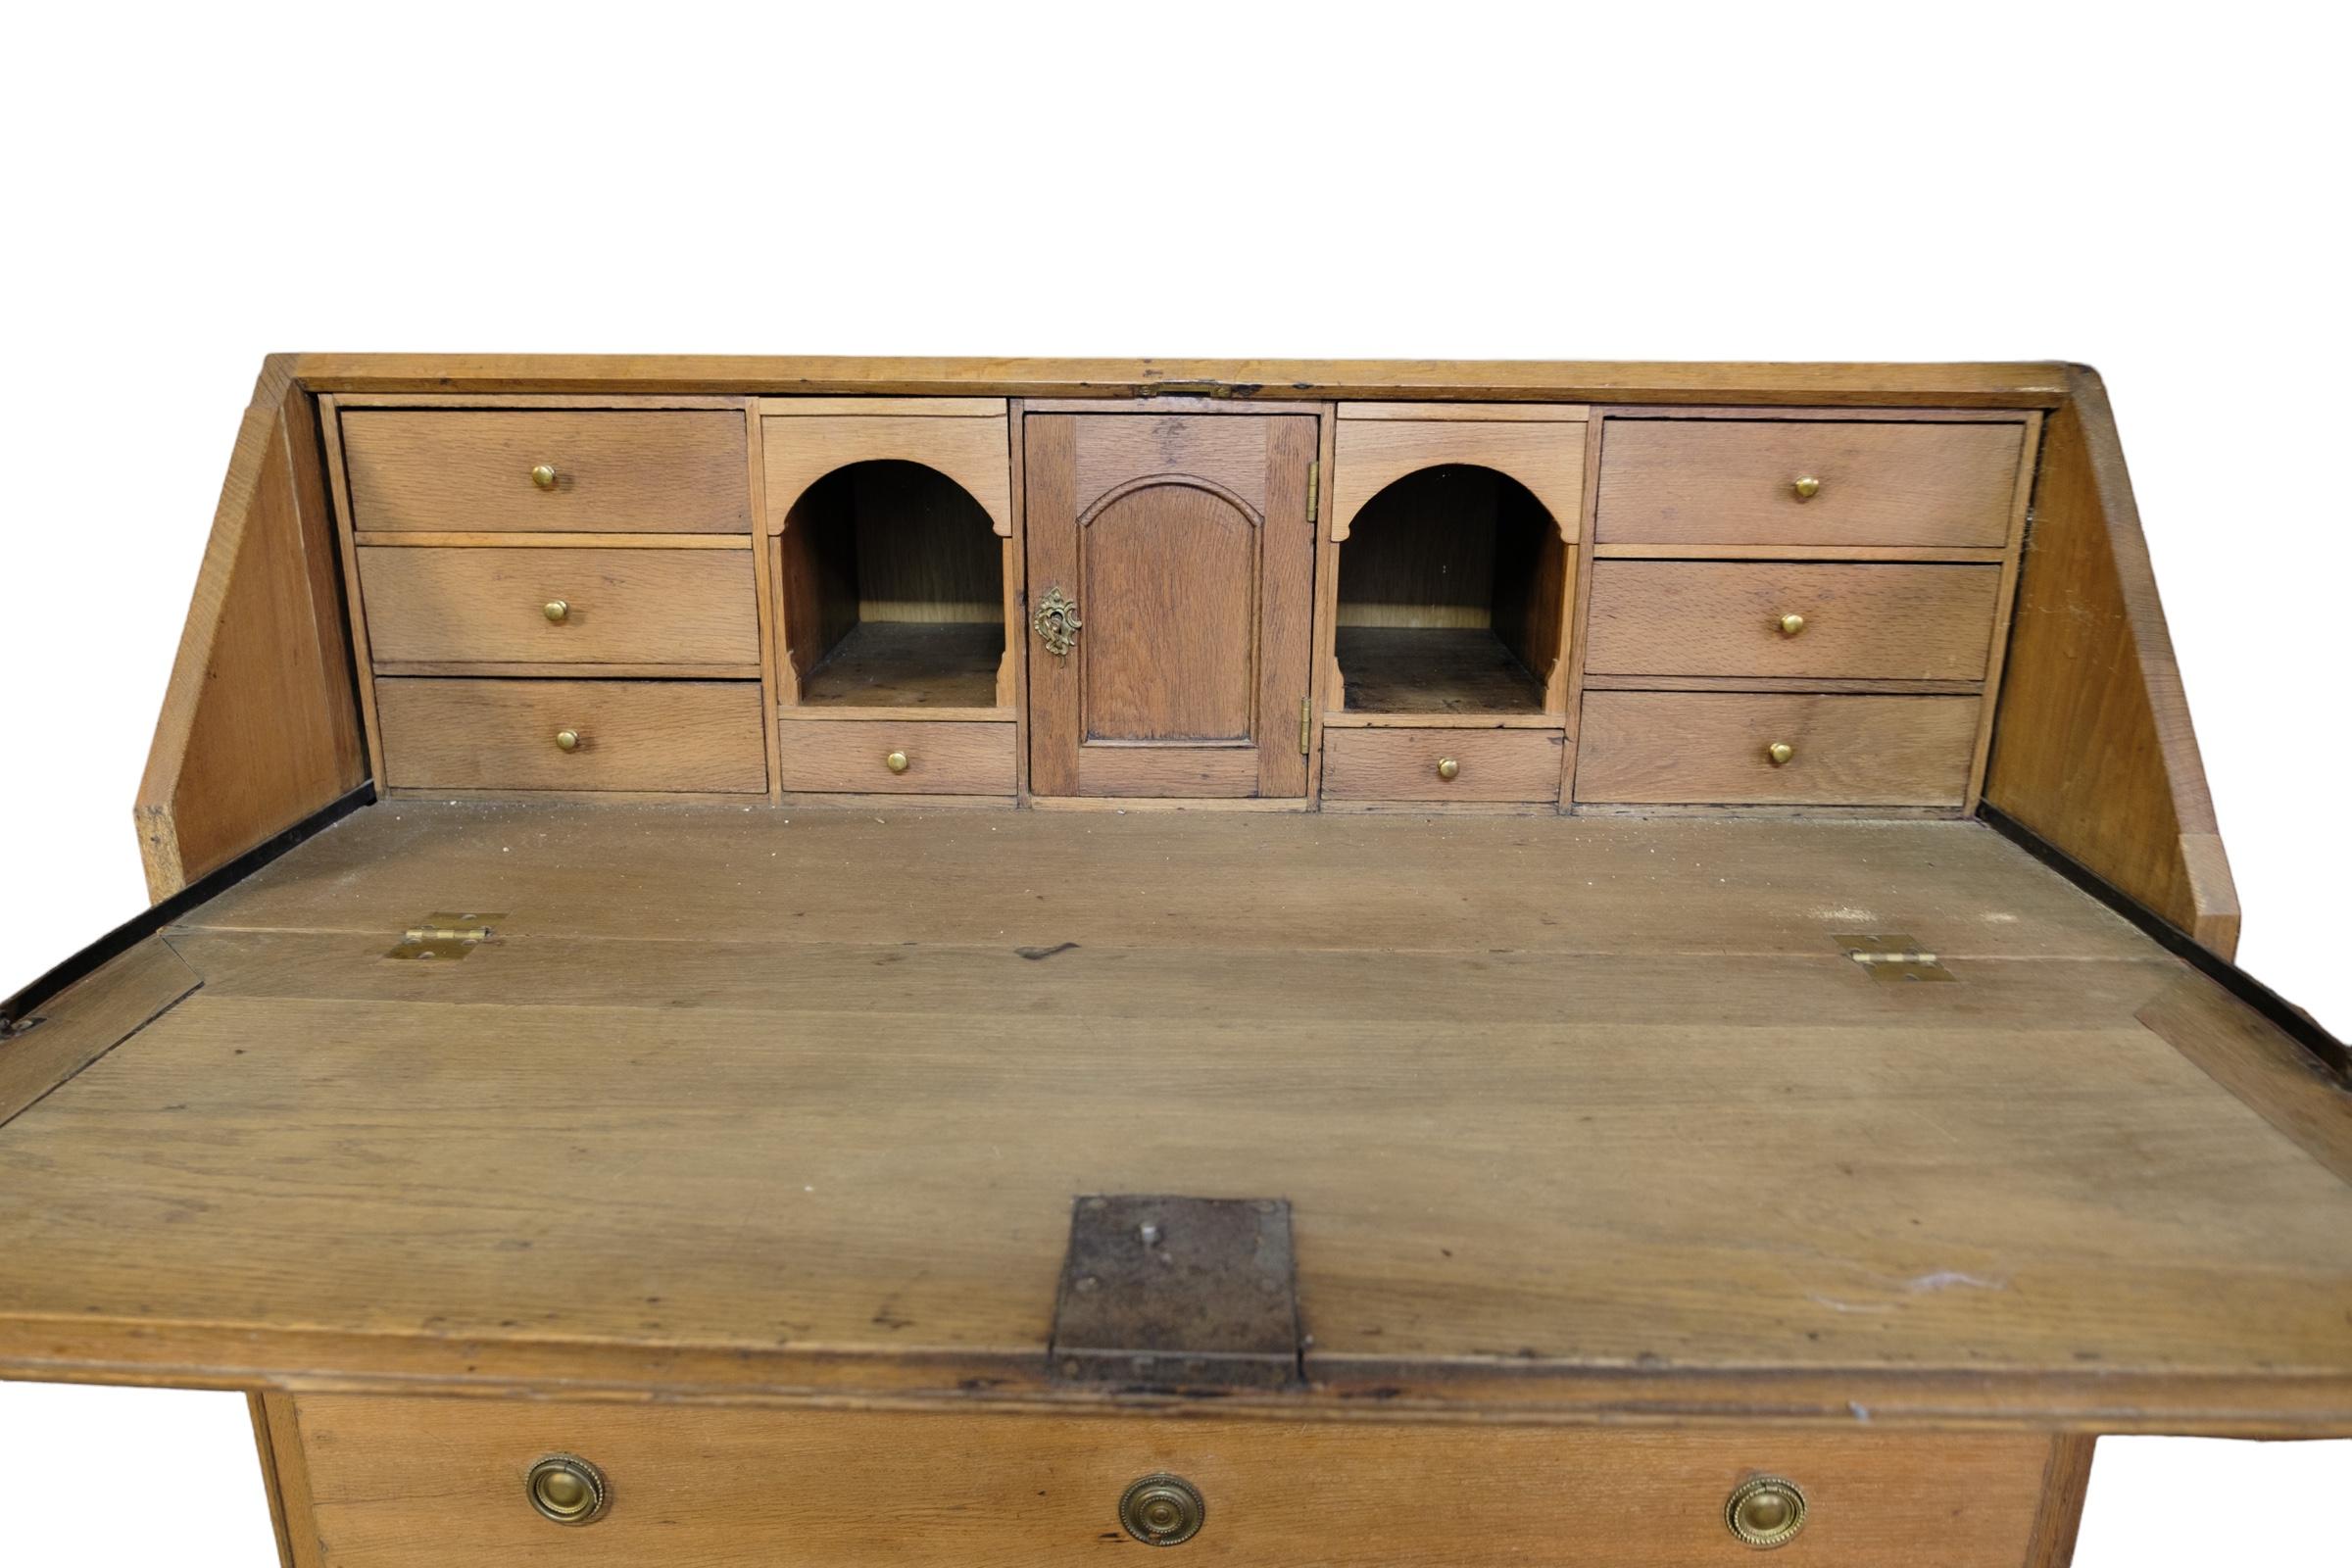 Chatol de style Louis Seize à 3 tiroirs en chêne d'environ 1780.
Mesures en cm : H:108 L:118 P:57